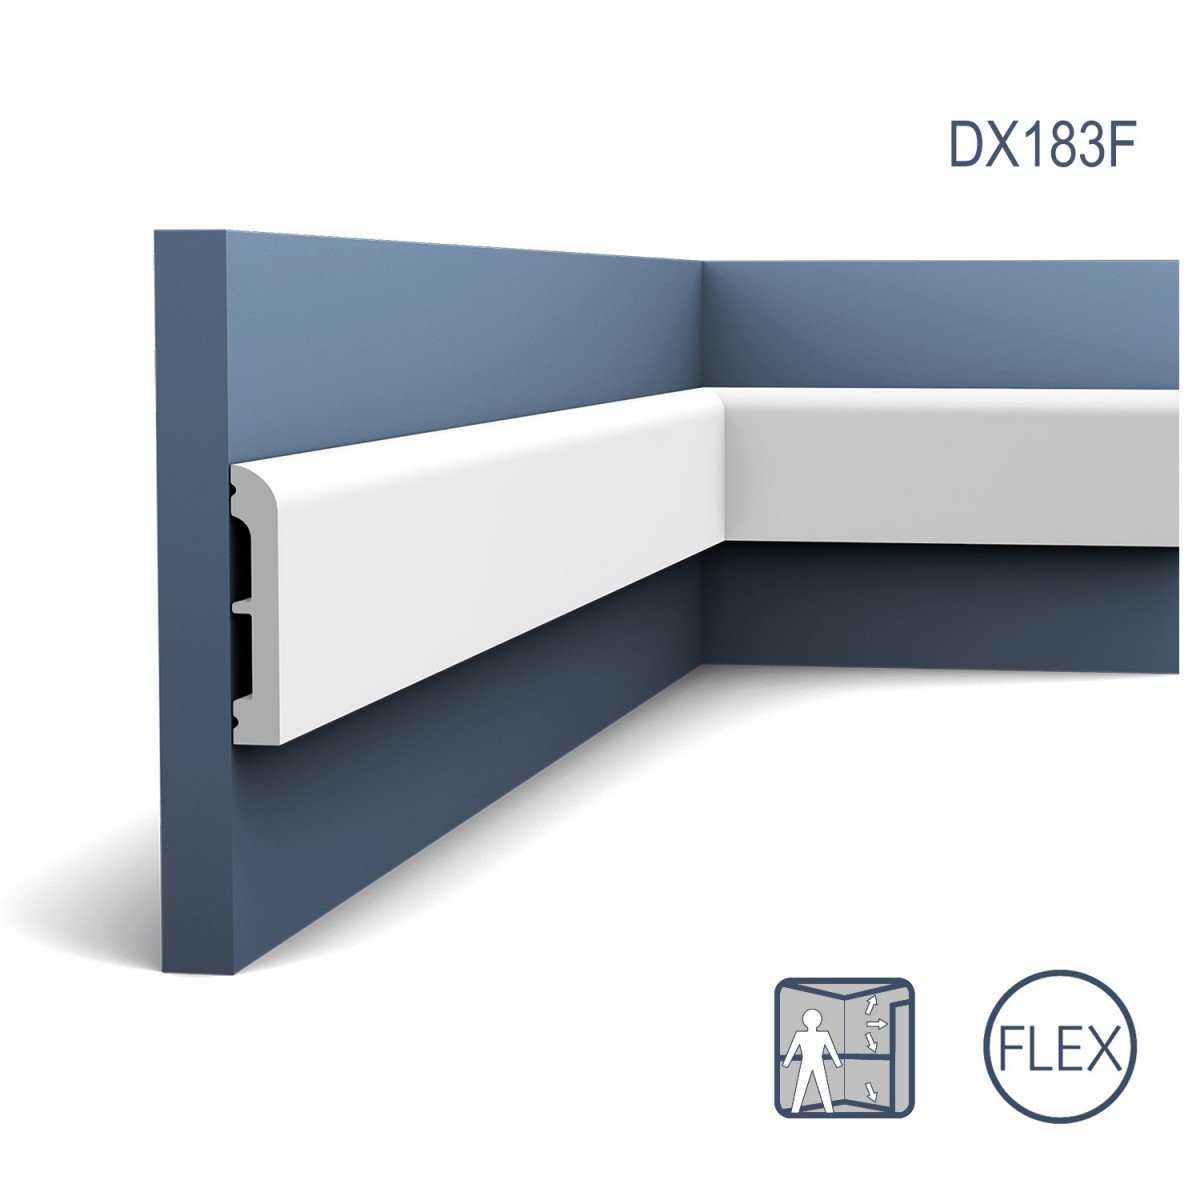 Plinta Flex Axxent SX183F, Dimensiuni: 200 X 1.3 X 7.5 cm, Orac Decor, Plinte decorative, Profile Decorative 